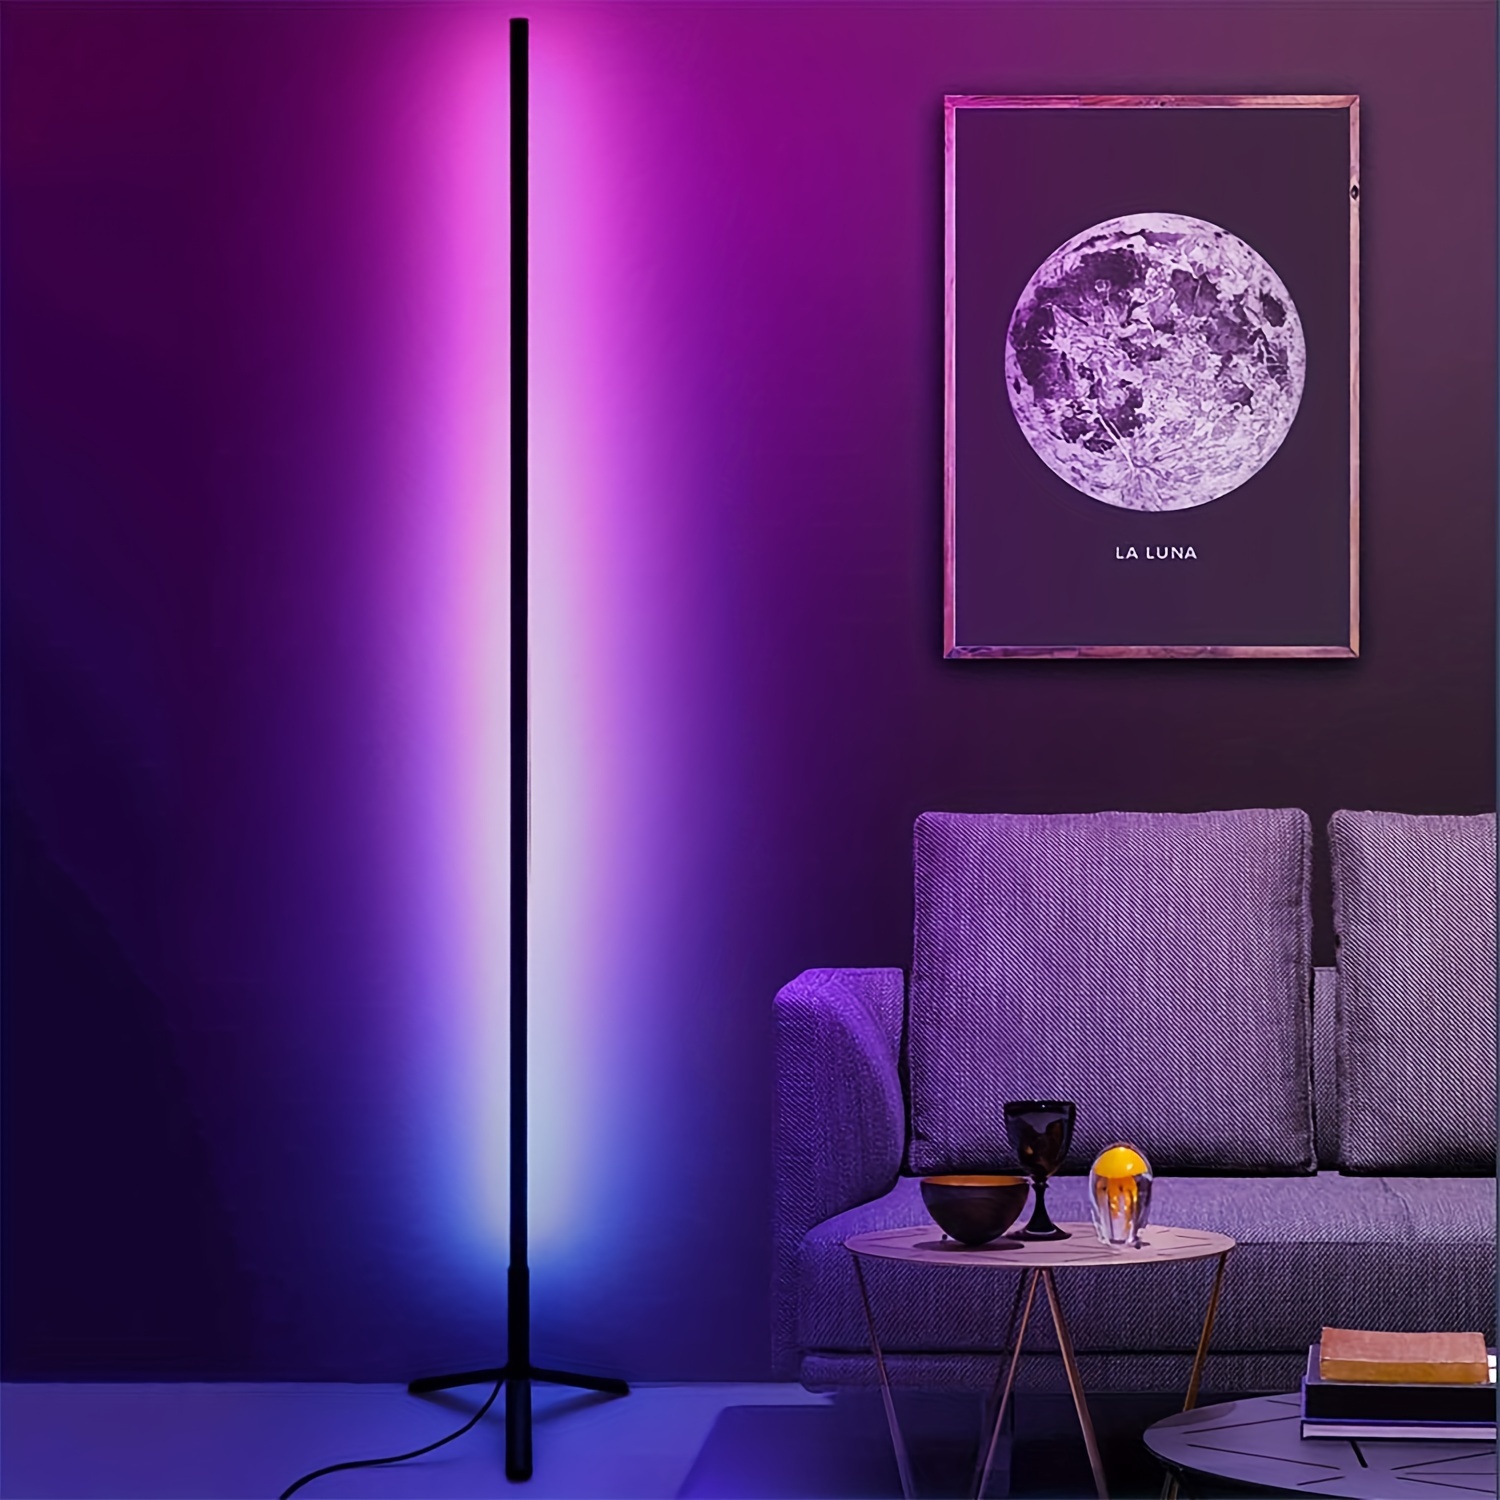 Ebest LED Floor Lamp with Remote LED Lamp Lash Light for Eyelash Extensions Craft Task Lamps Floor Standing Light Gooseneck DIMM